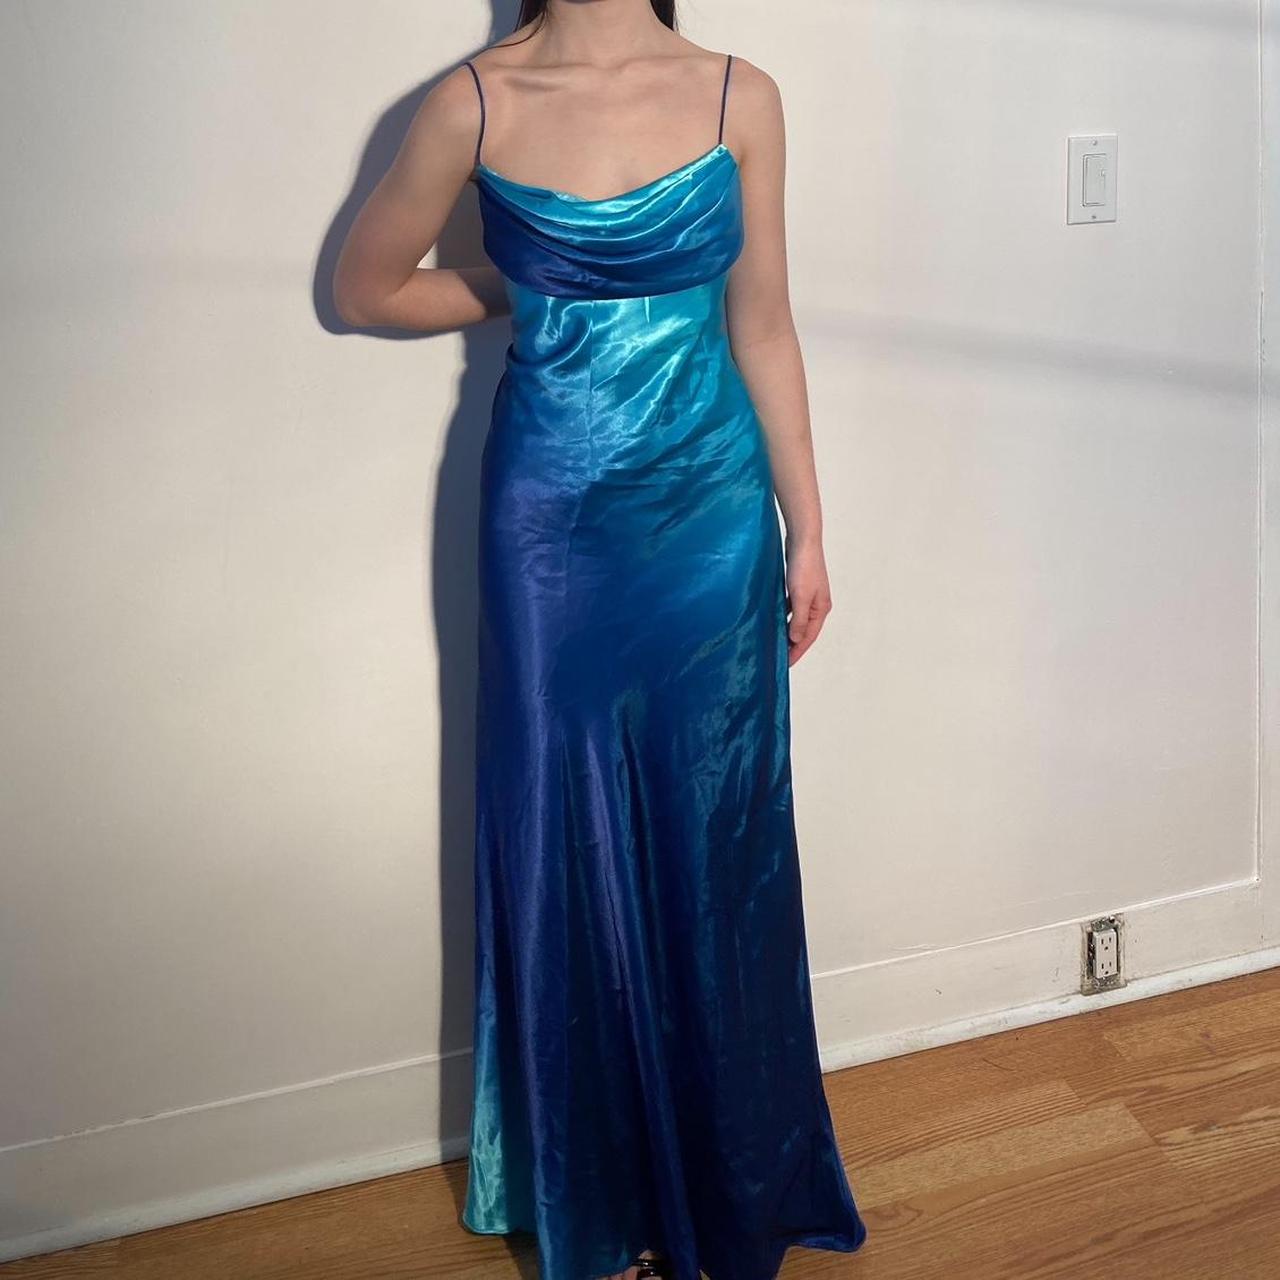 Vintage blue ombre satin prom dress gown Blue shiny... - Depop